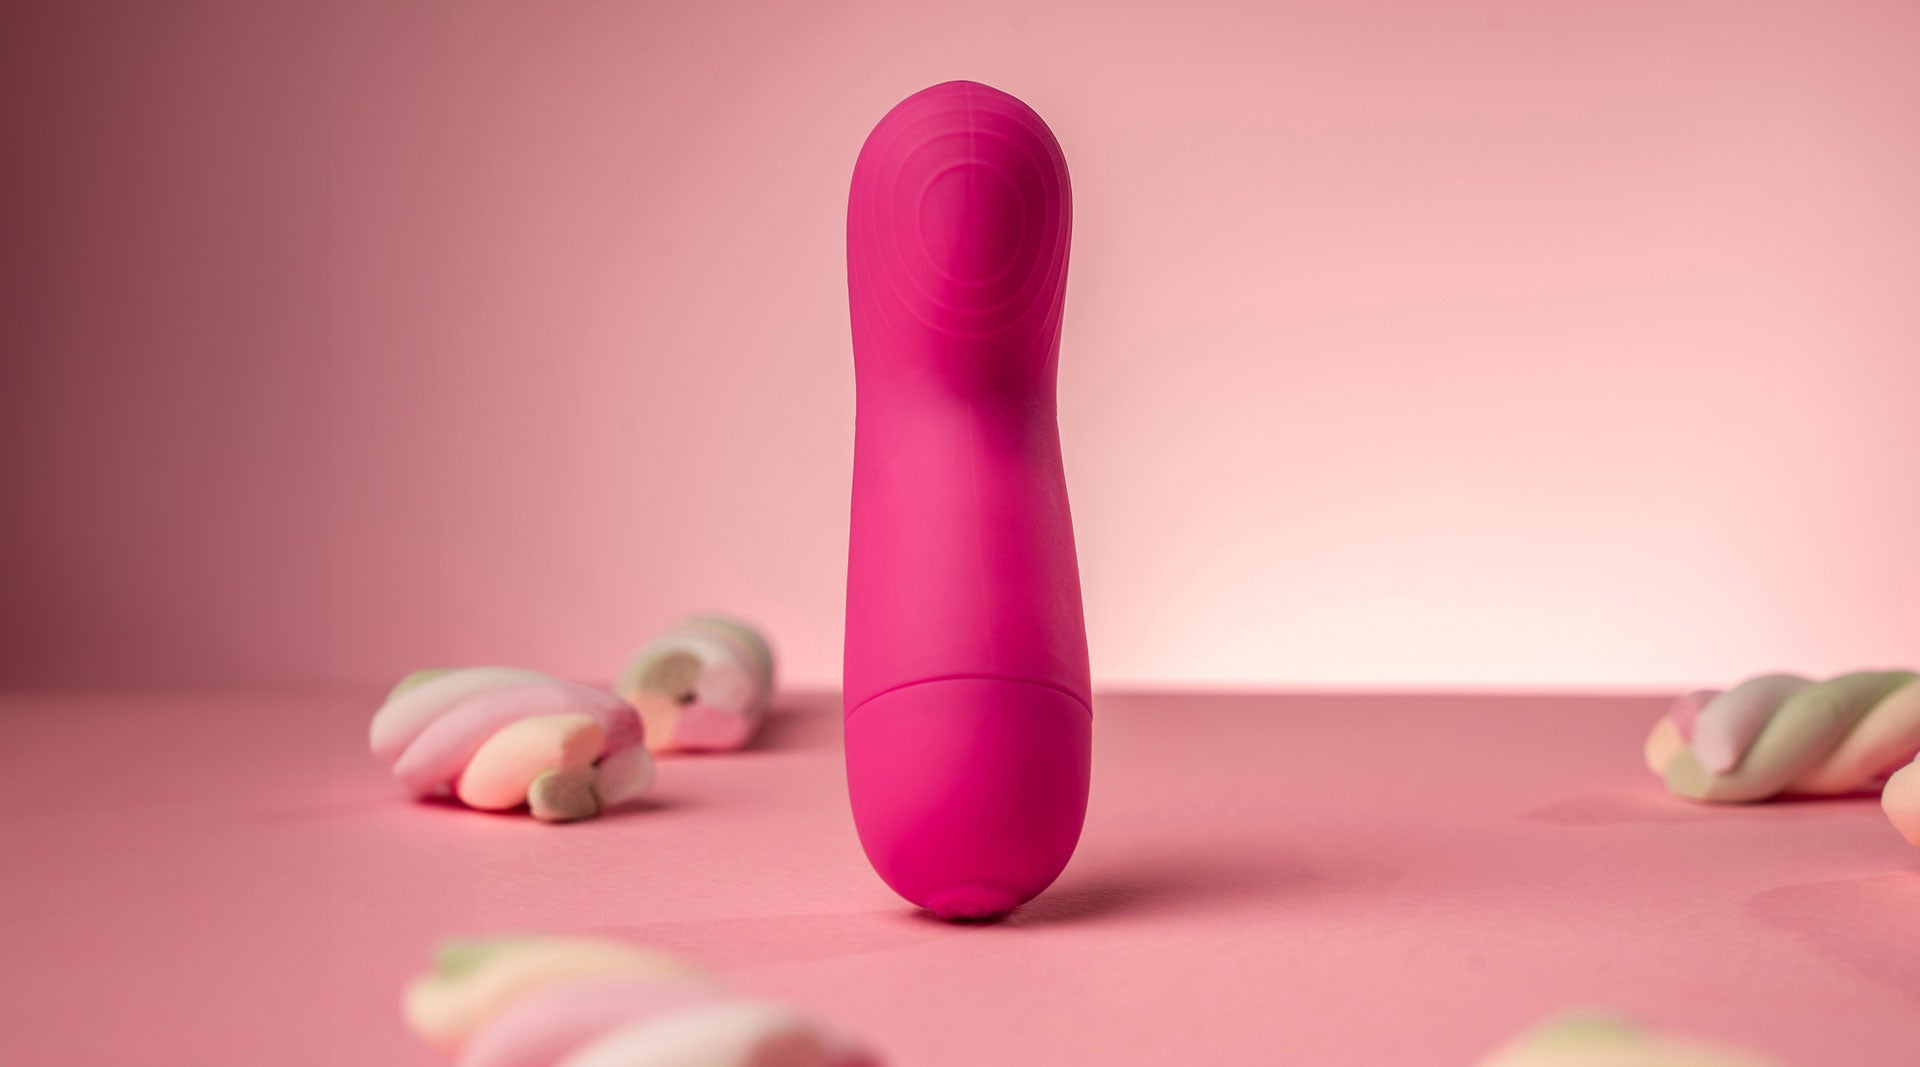 Small discreet G-spot vibrator in pink.